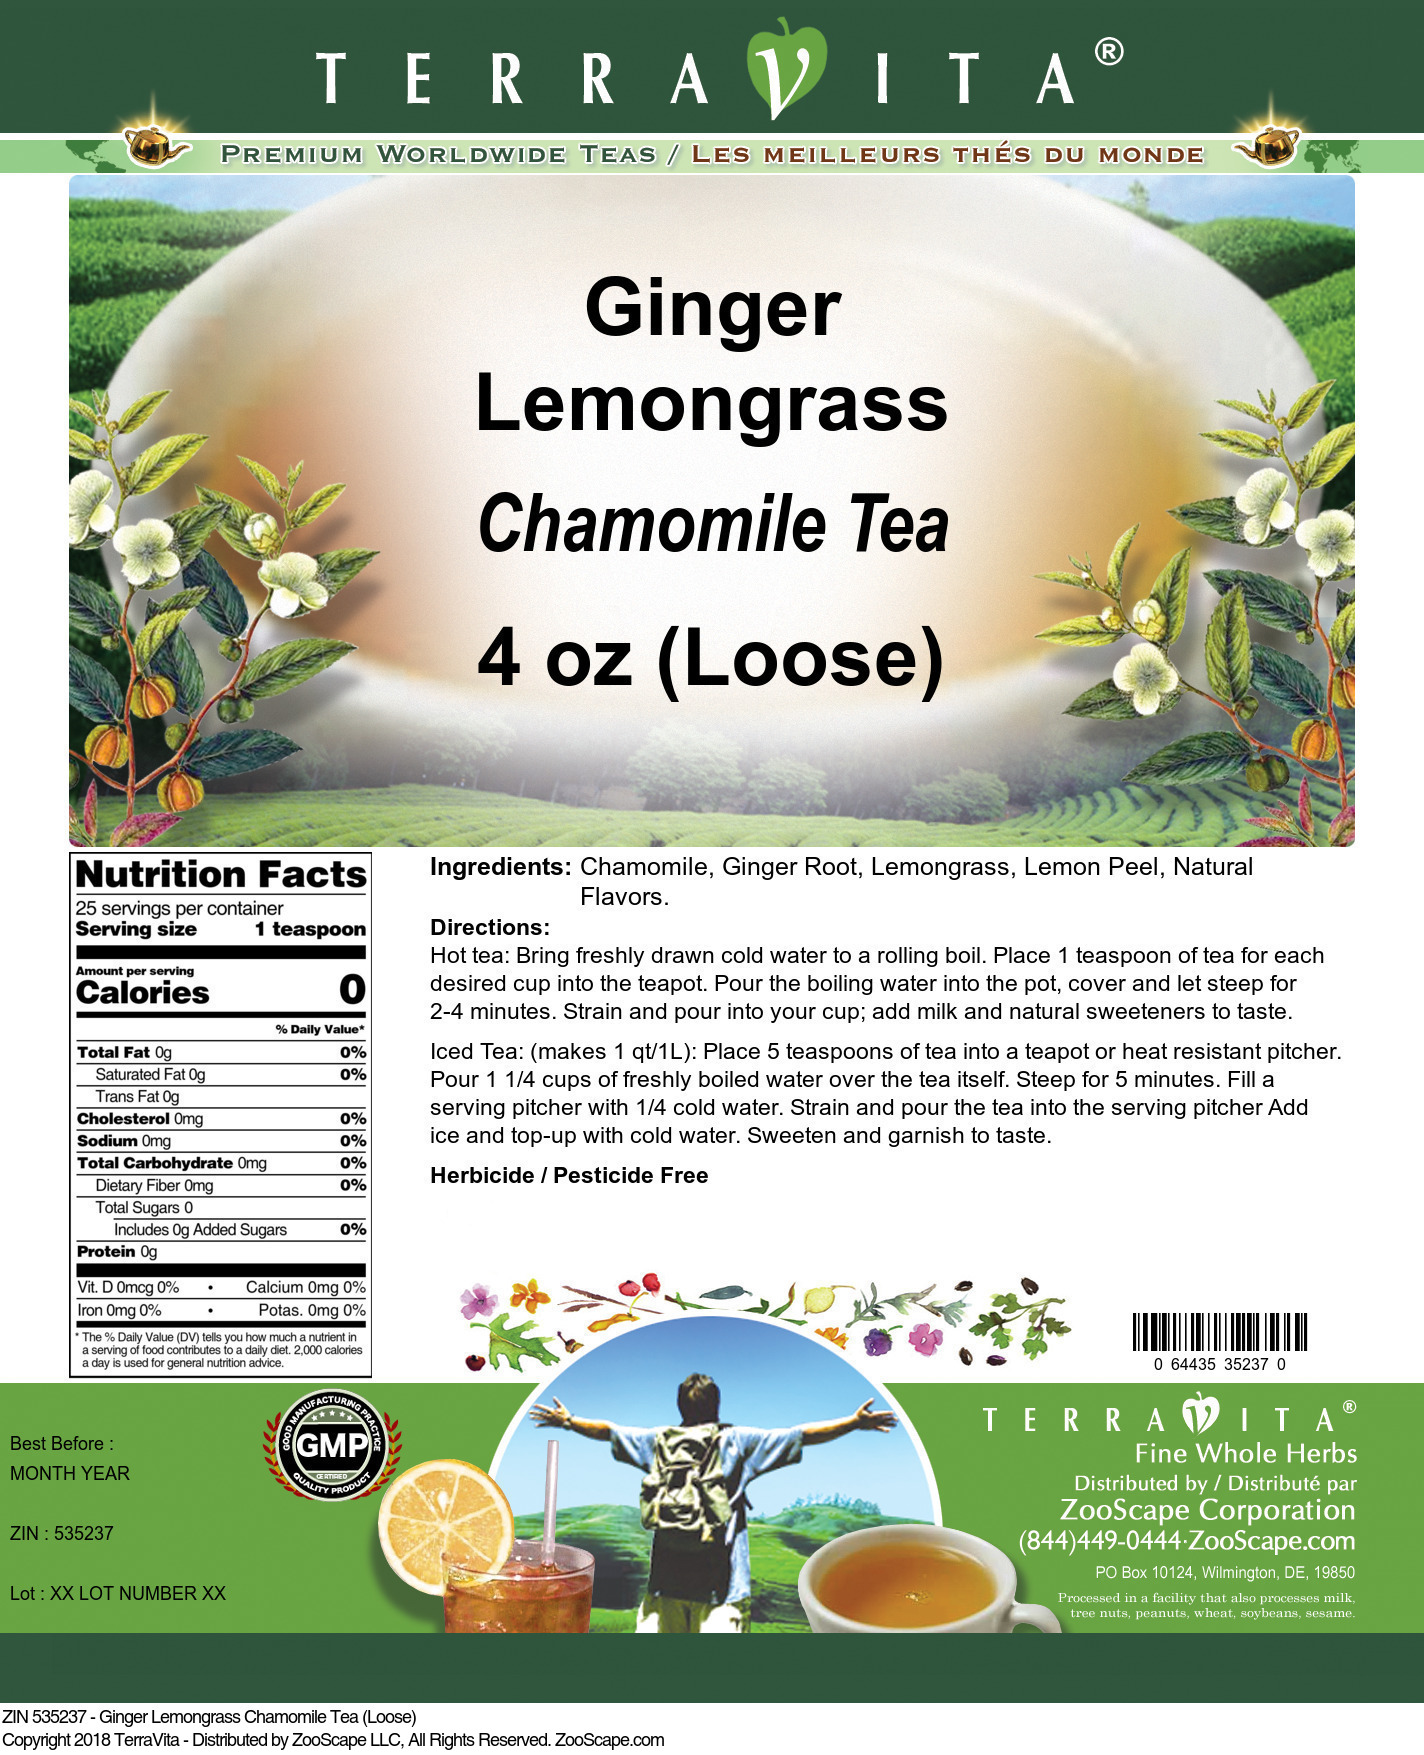 Ginger Lemongrass Chamomile Tea (Loose) - Label